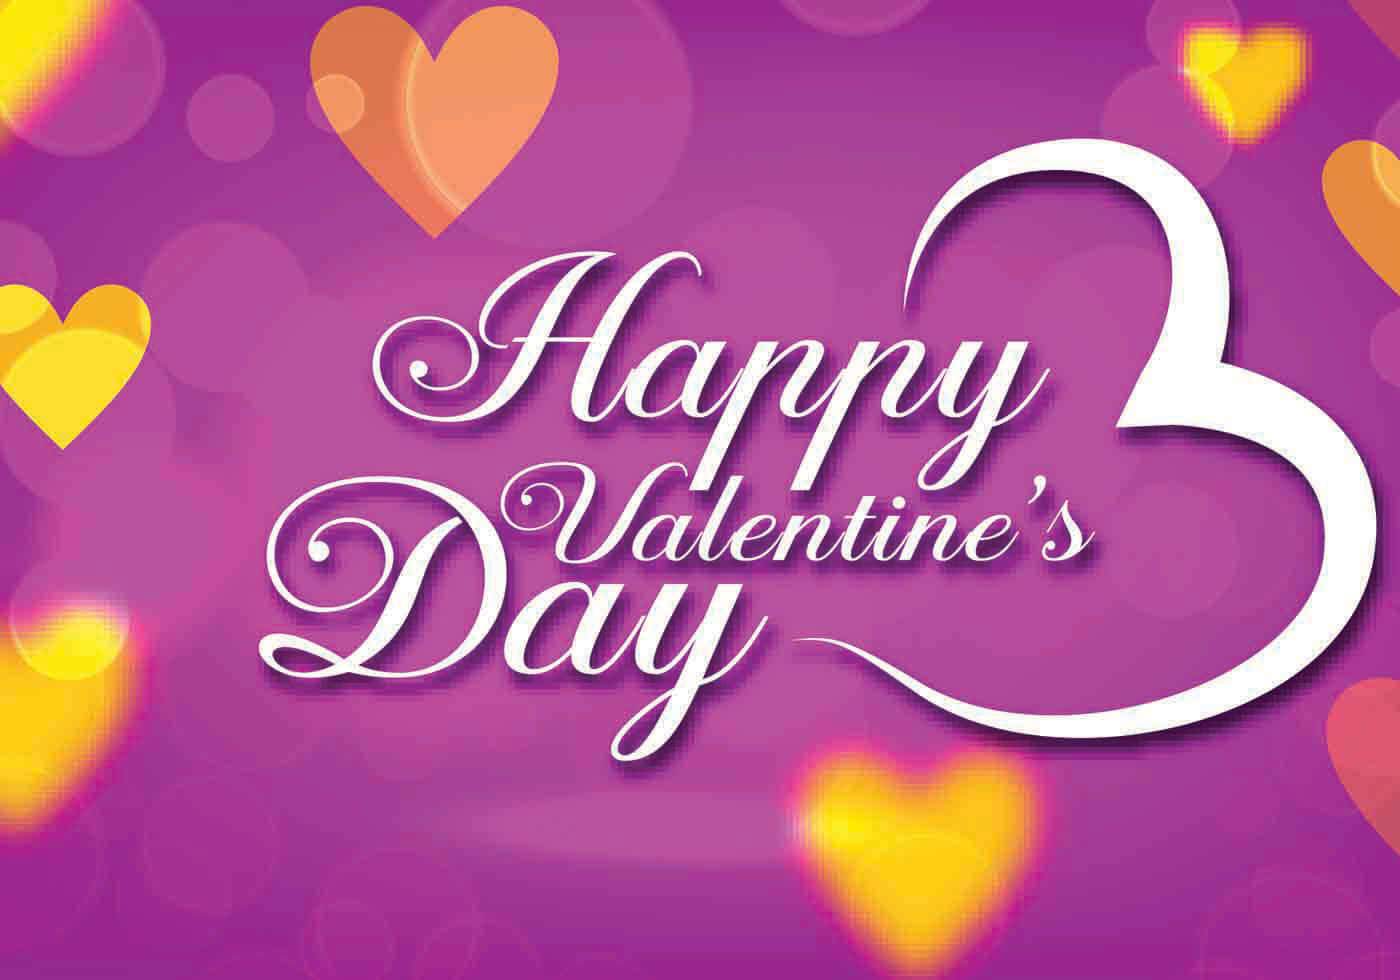 Wishing you a Happy Valentine's Day